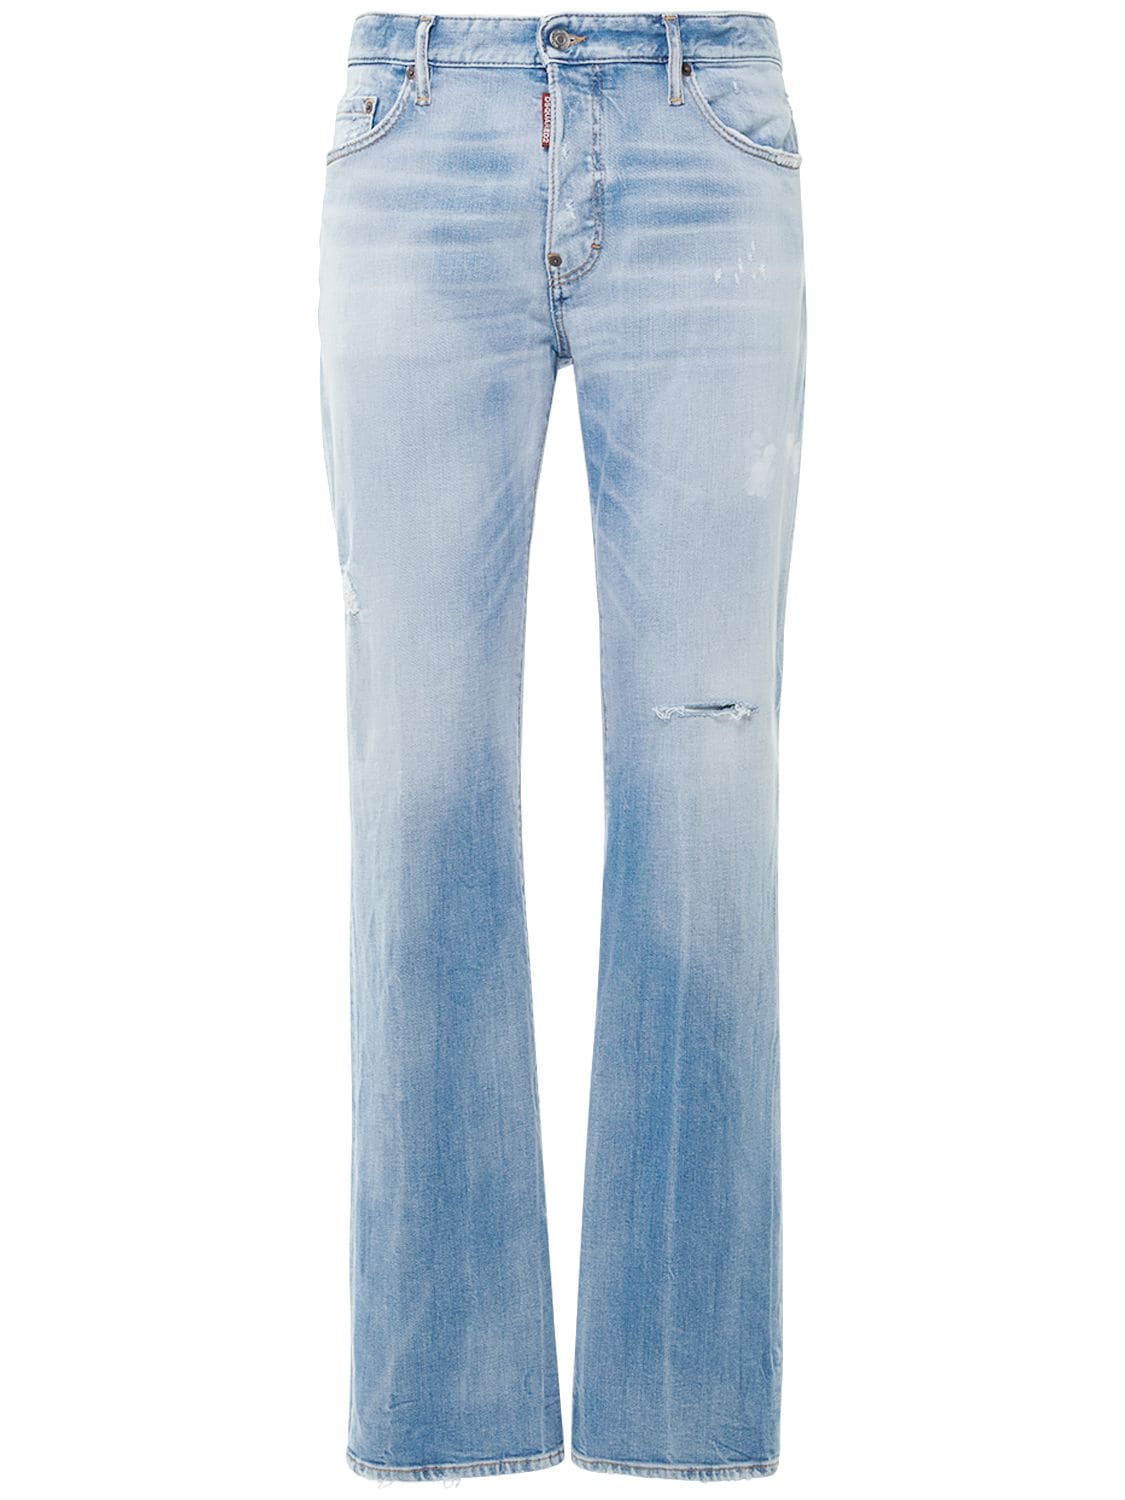 Image of Roadie Stretch Denim Jeans